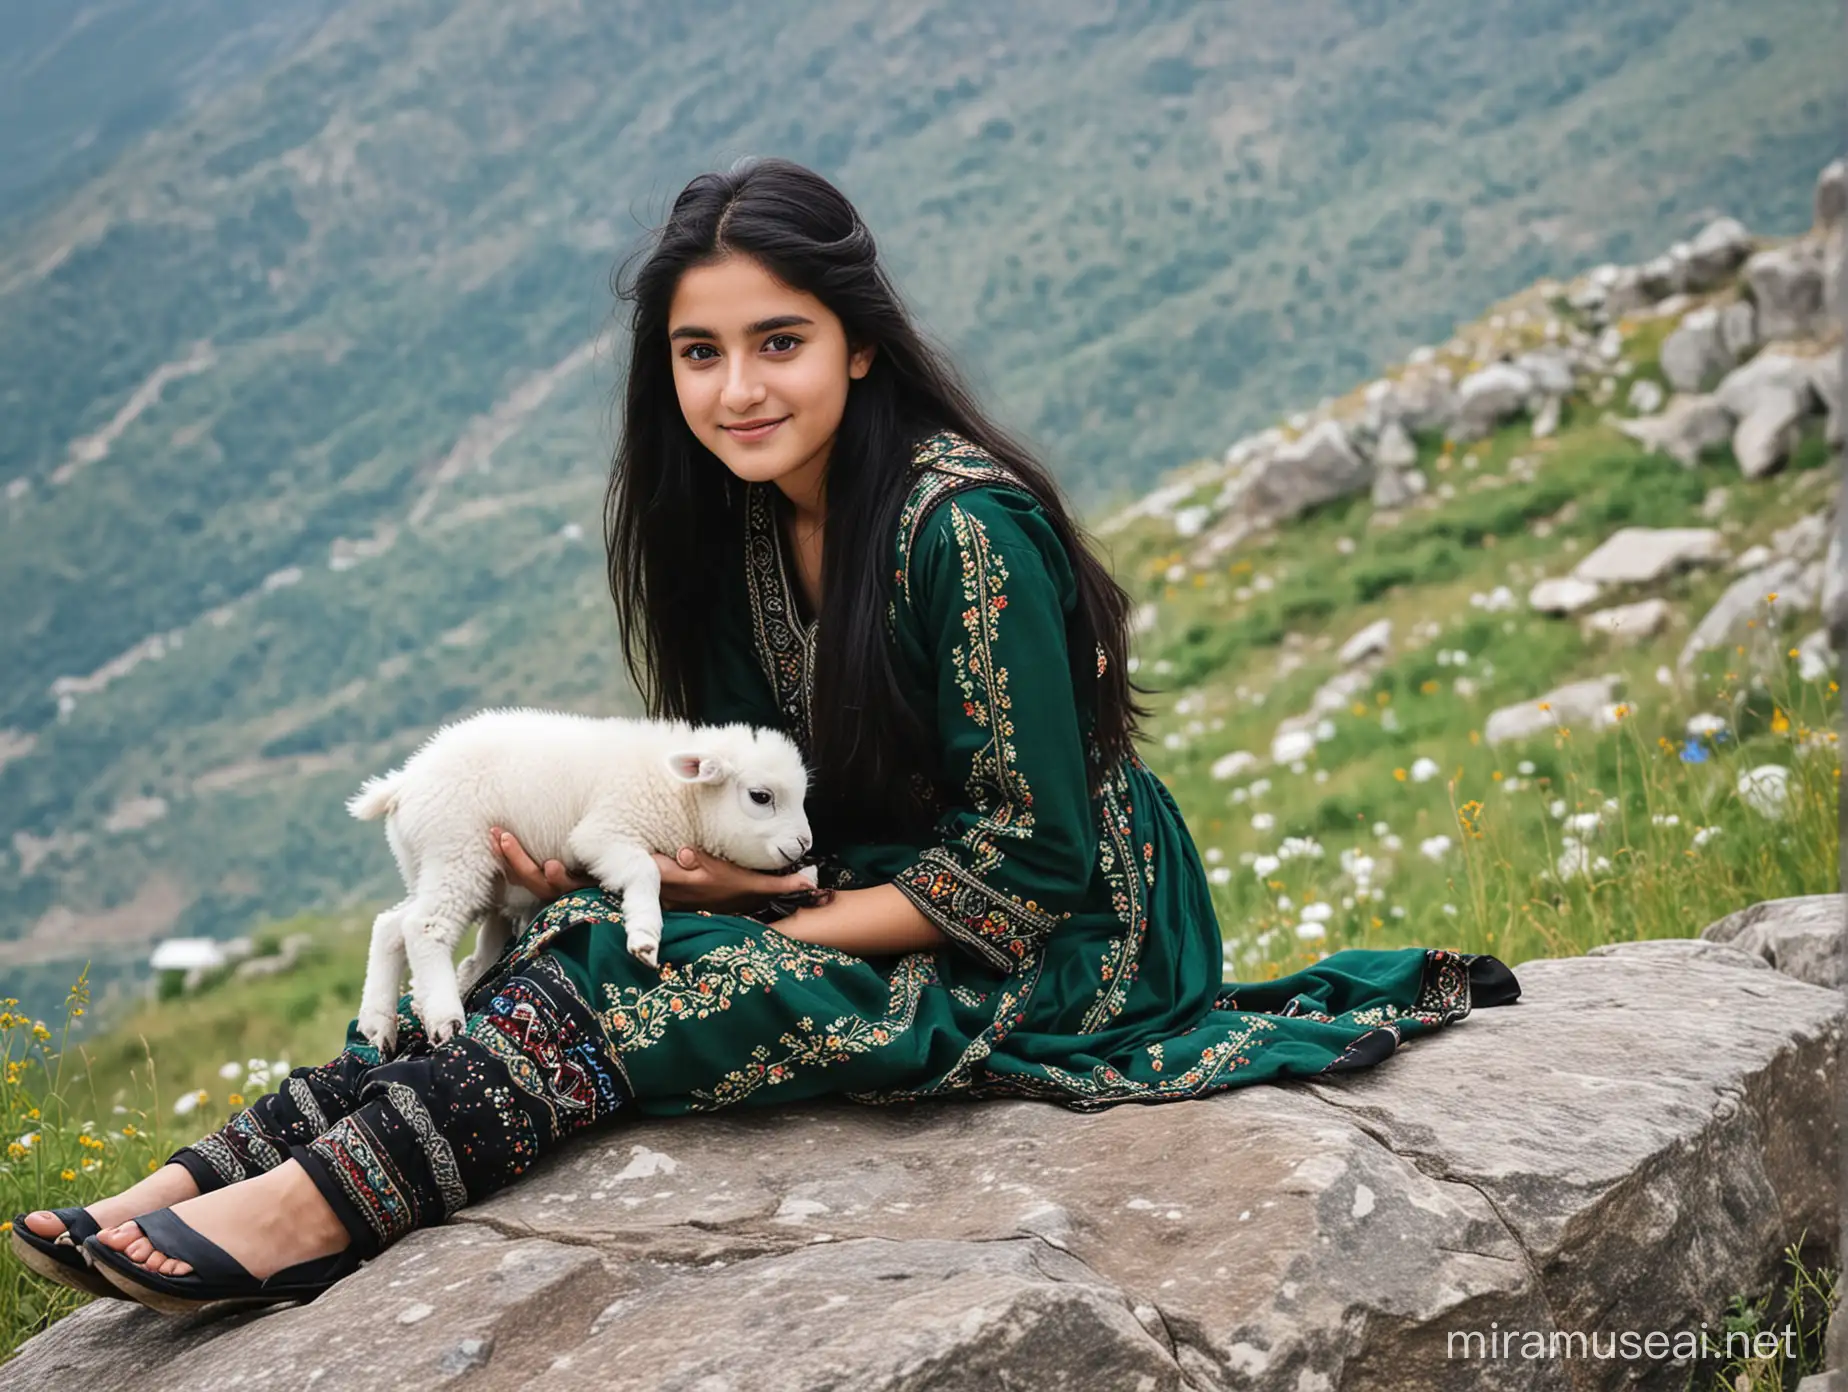 Teen Pakistani Girl with Blue Eyes Playing with Lamb on Mountain Peak